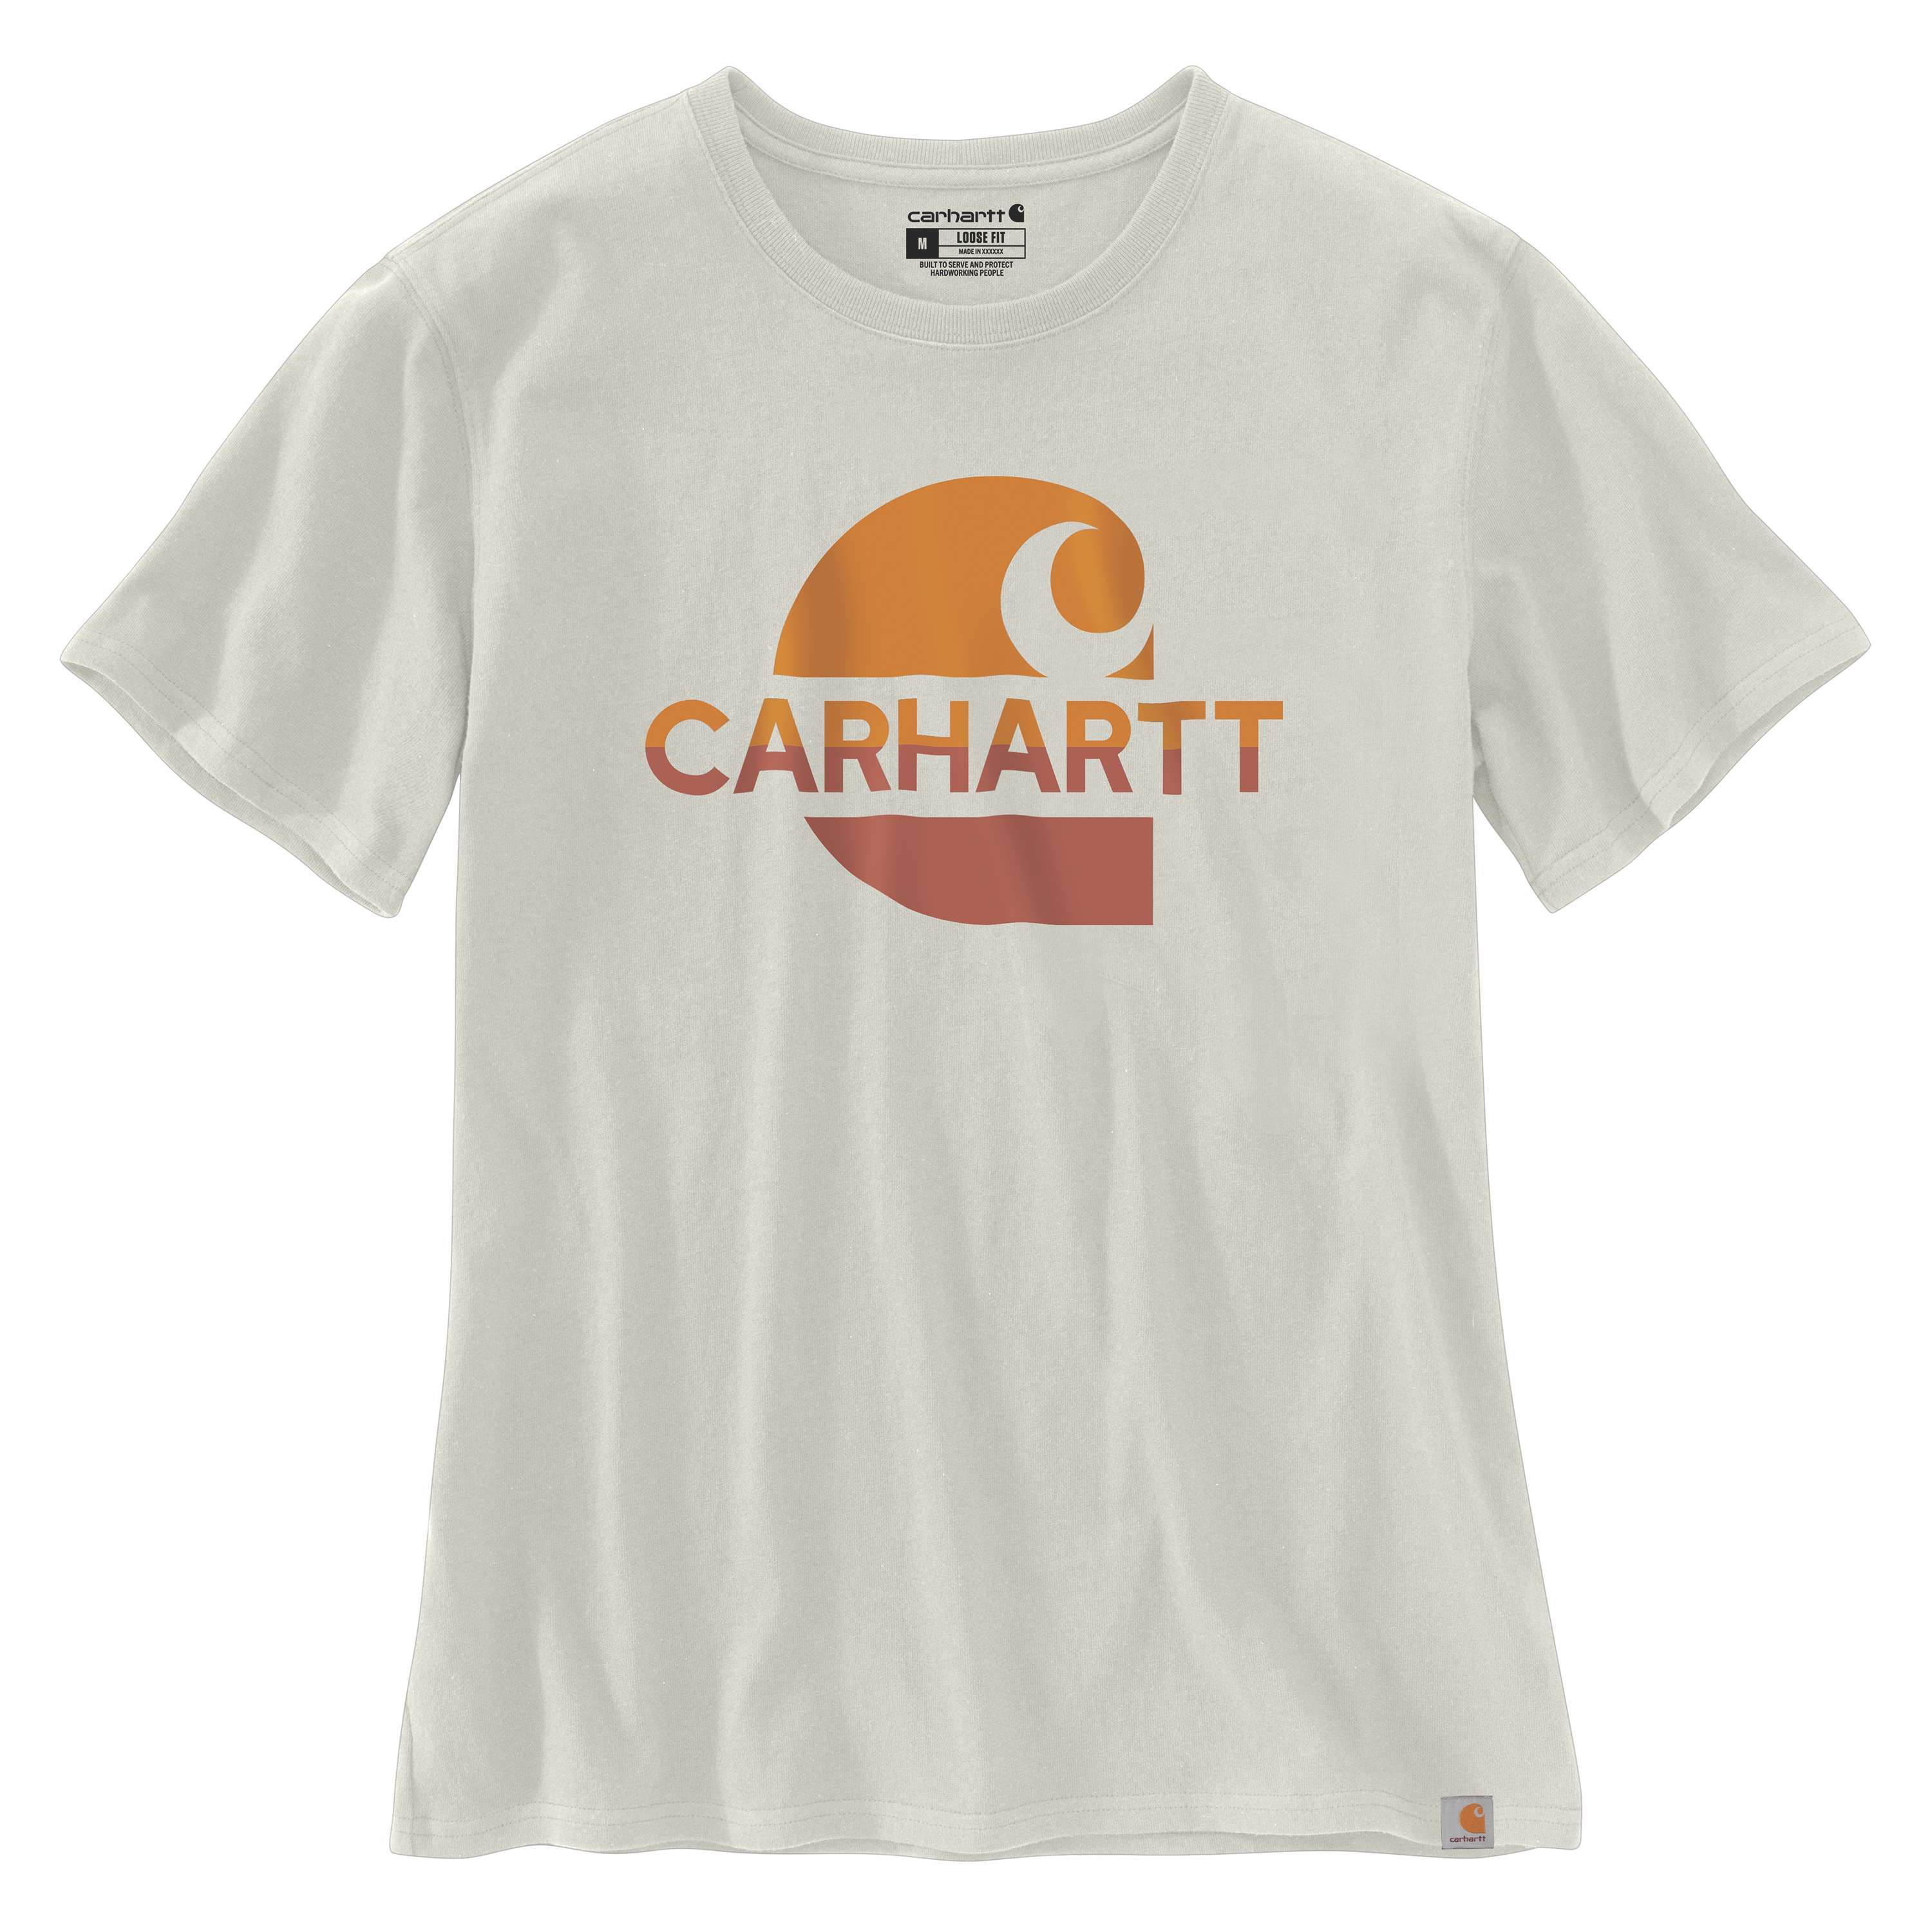 & | Carhartt | Carhartt Tees Graphic T-Shirts